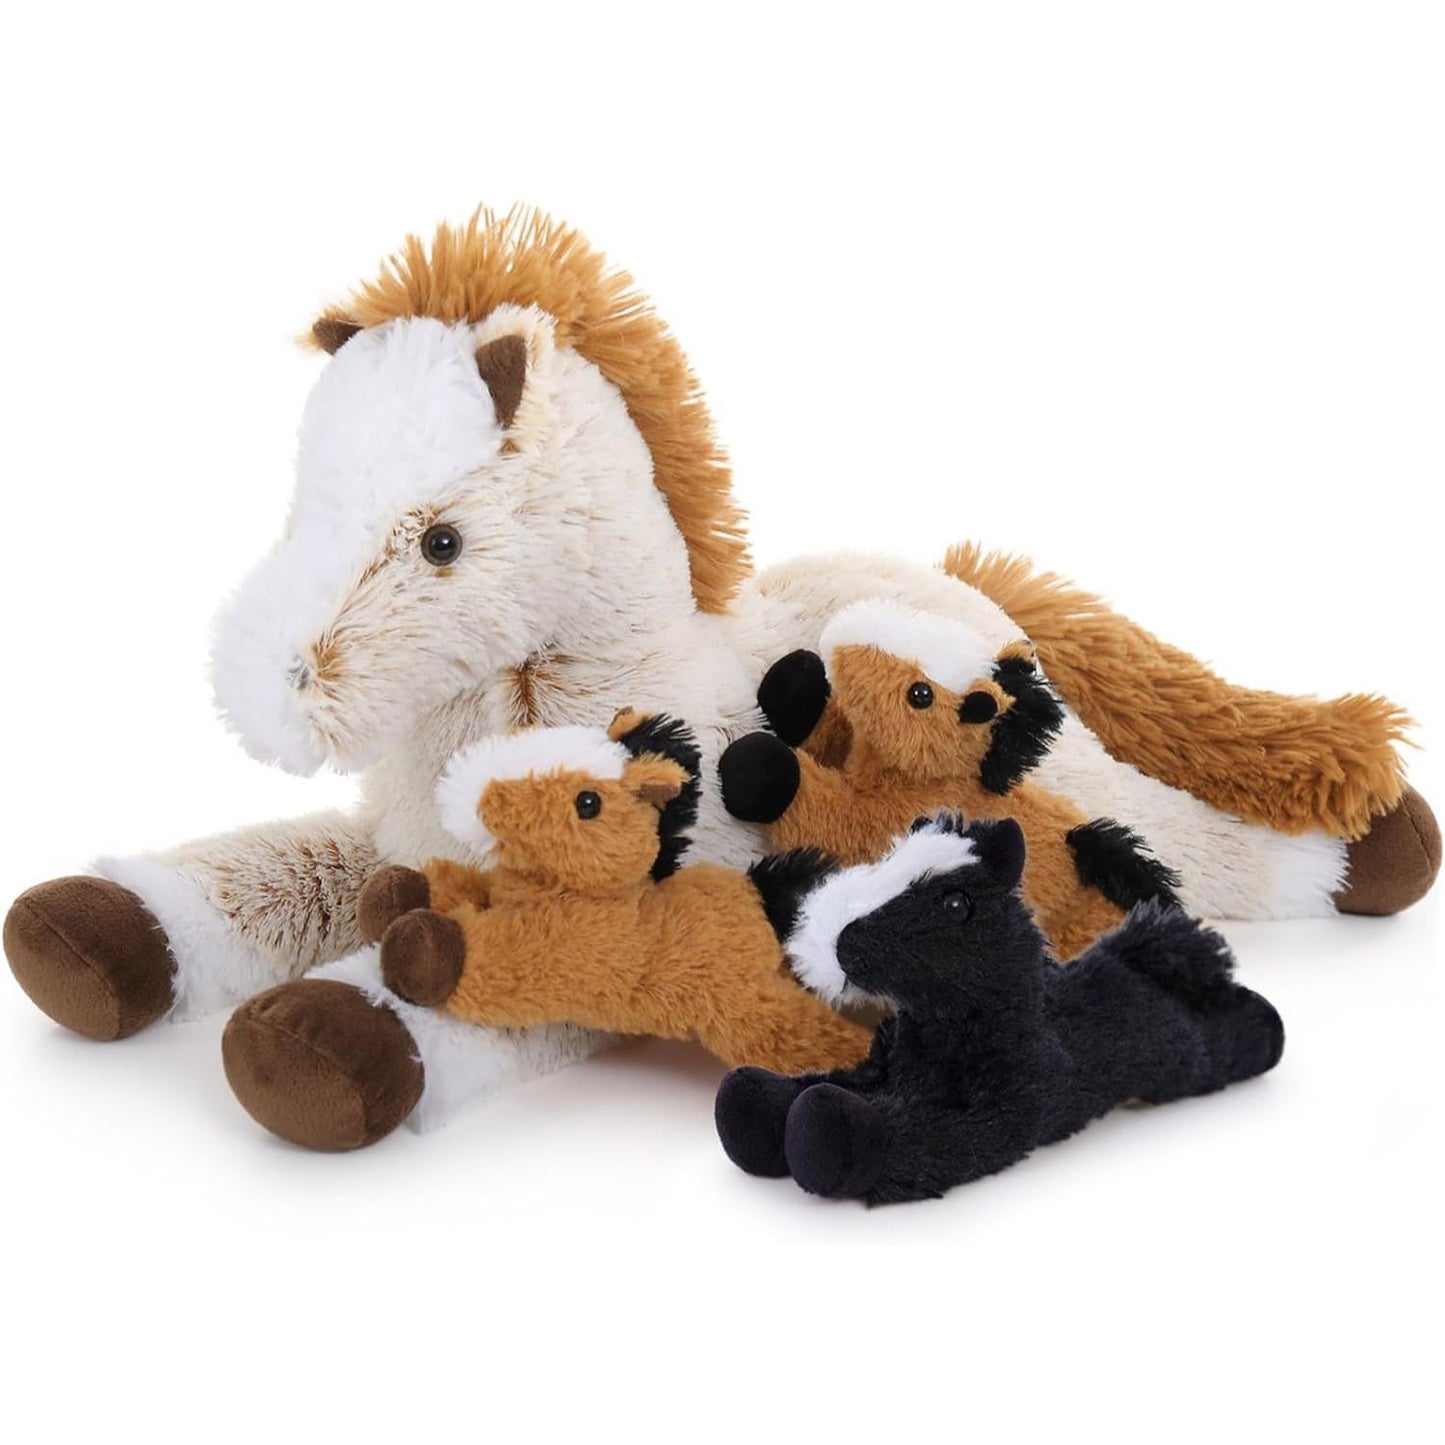 4 Pcs Horse Plush Toys, 21 Inches - MorisMos Stuffed Animals